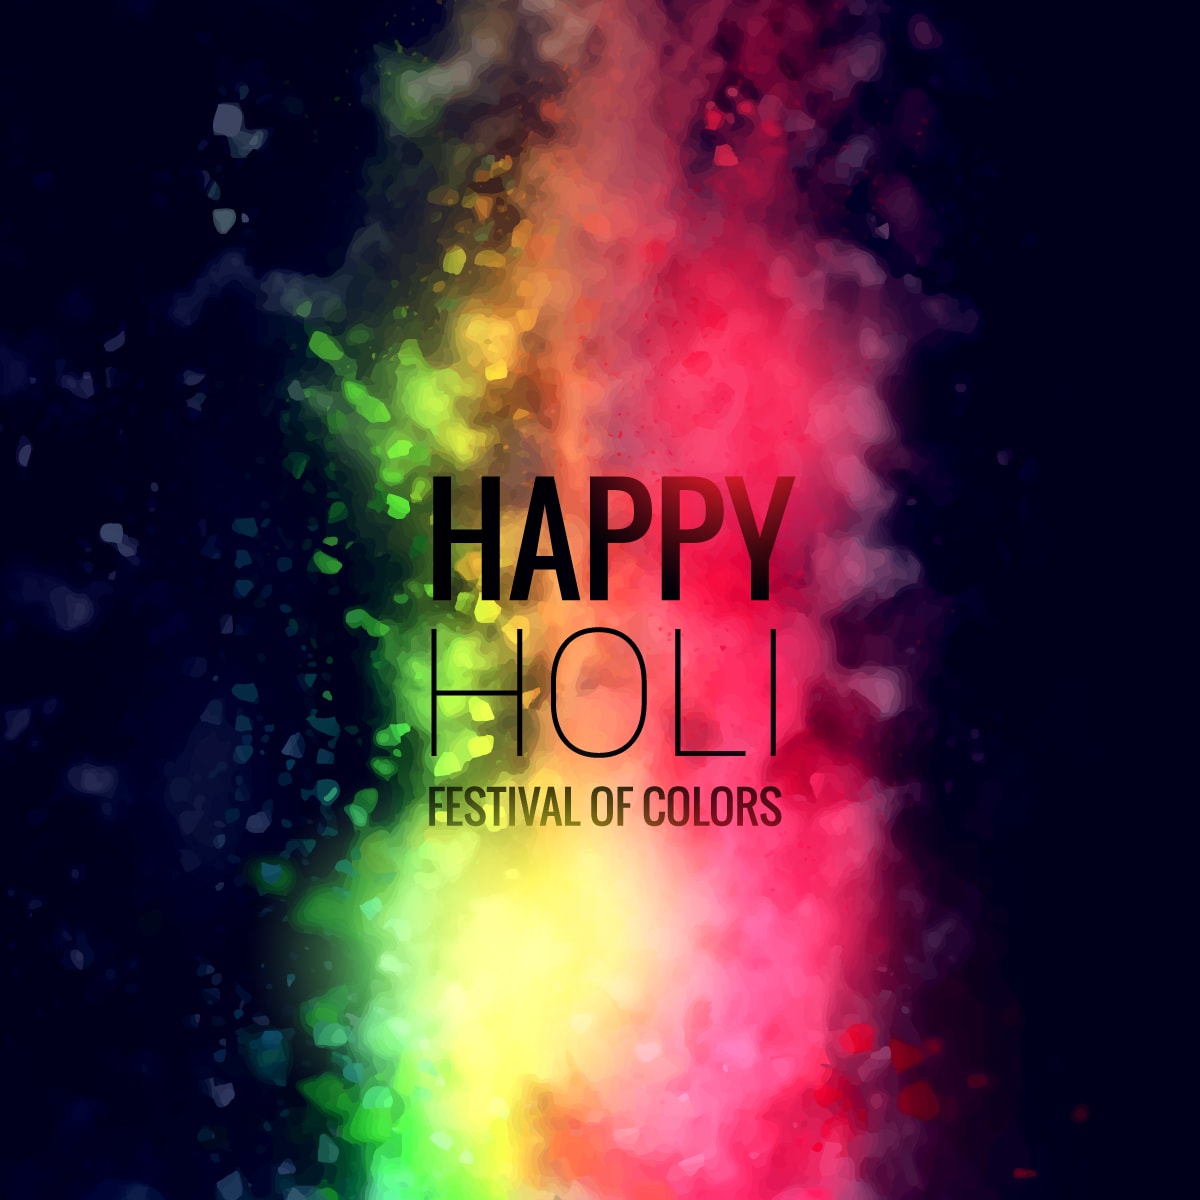 Happy Holi 2017 Images - Happy Holi Images Hd - HD Wallpaper 